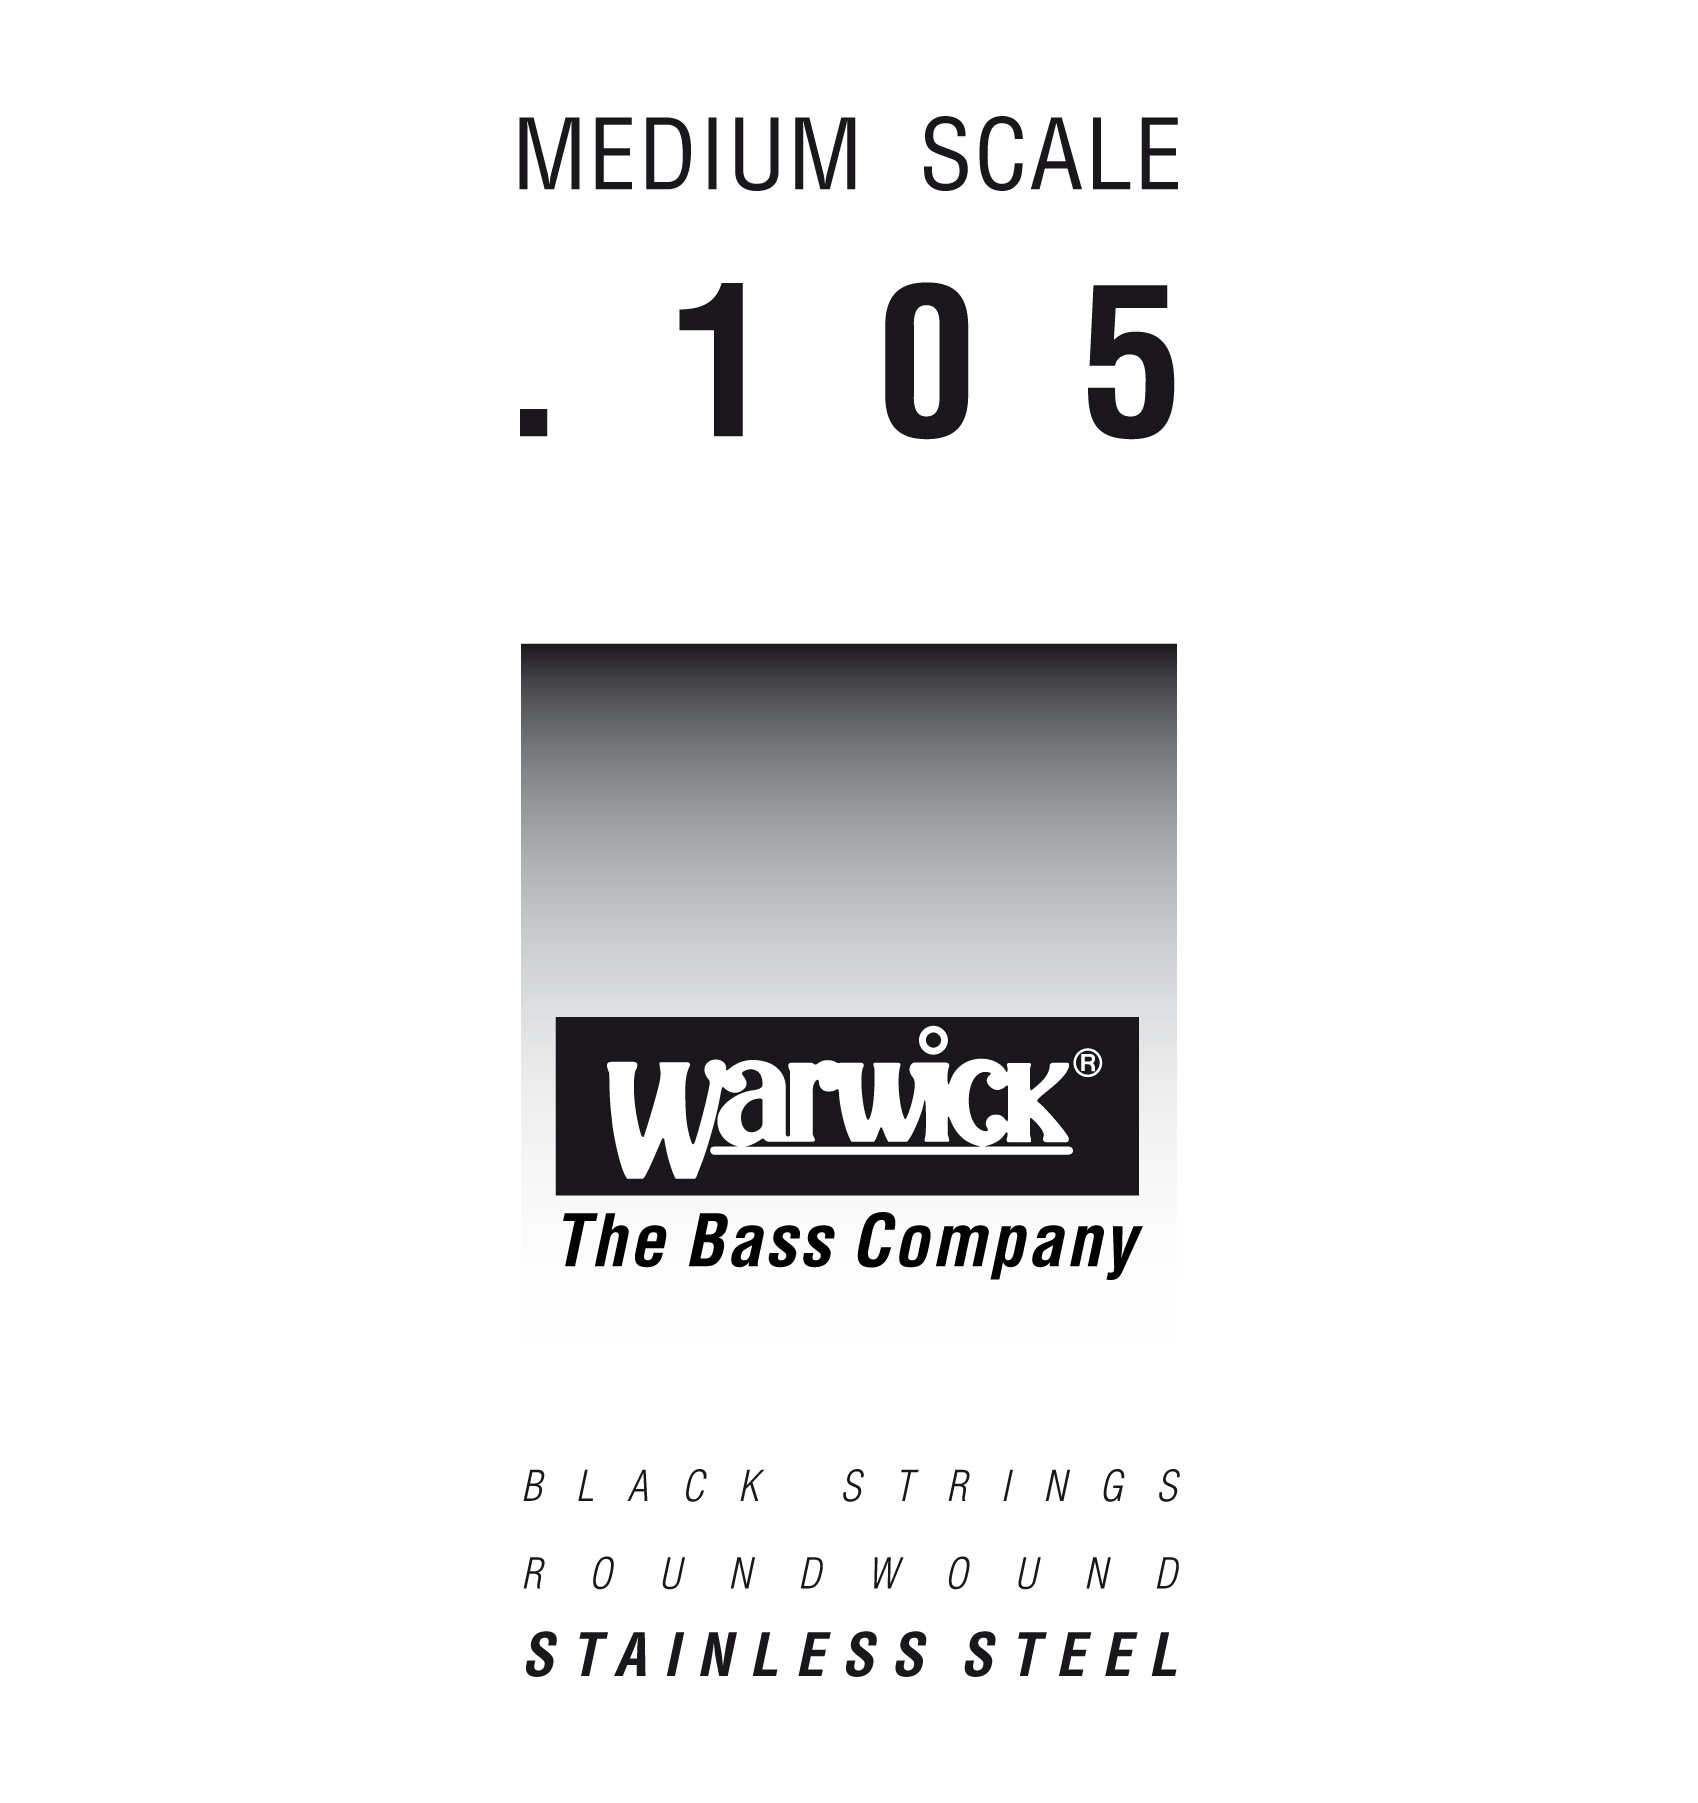 Warwick Black Label Bass Strings, Stainless Steel - Bass Single String, .105", Medium Scale